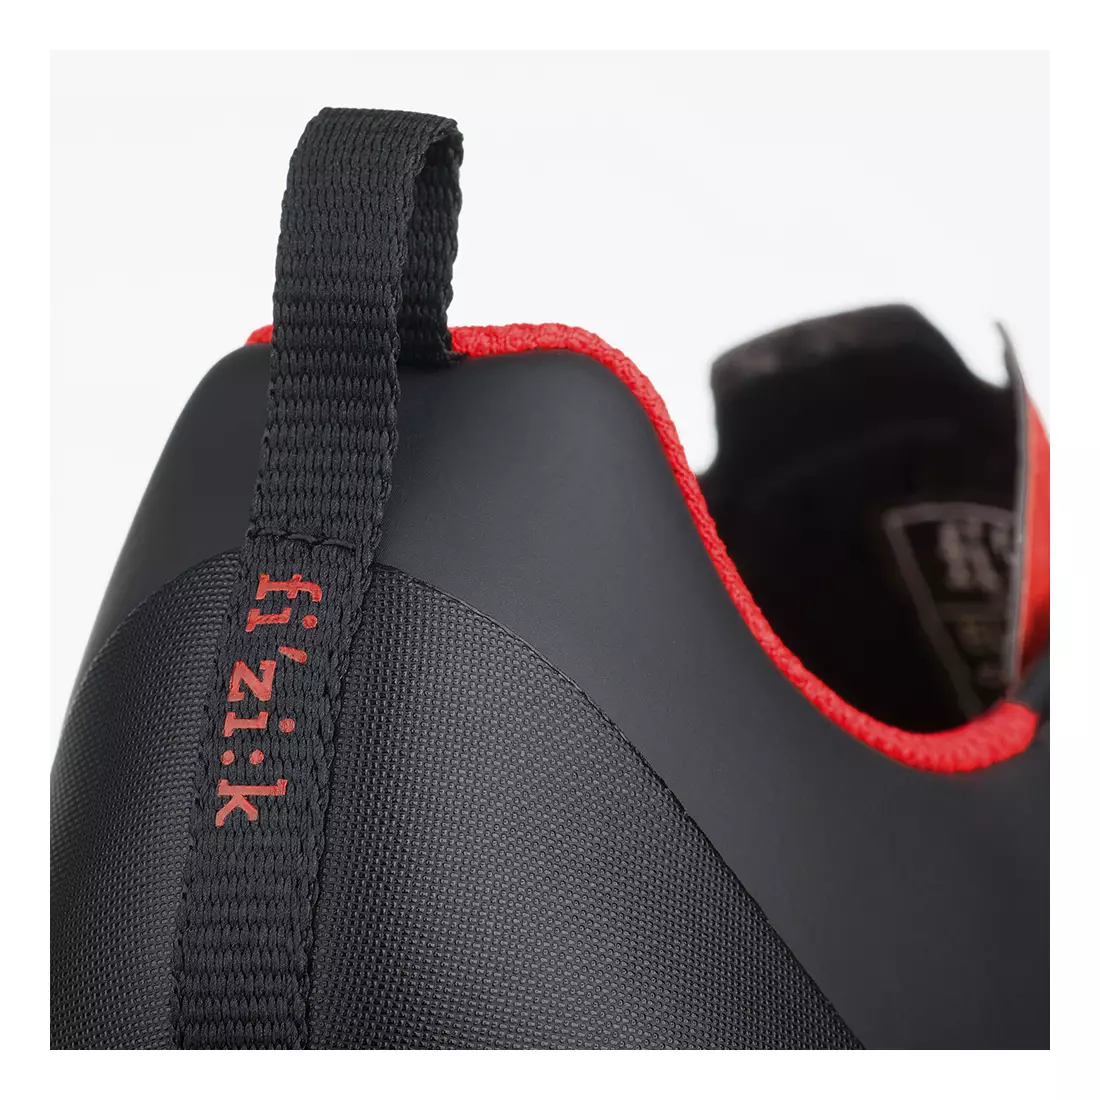 FIZIK Terra X5 mtb cycling shoes black and red